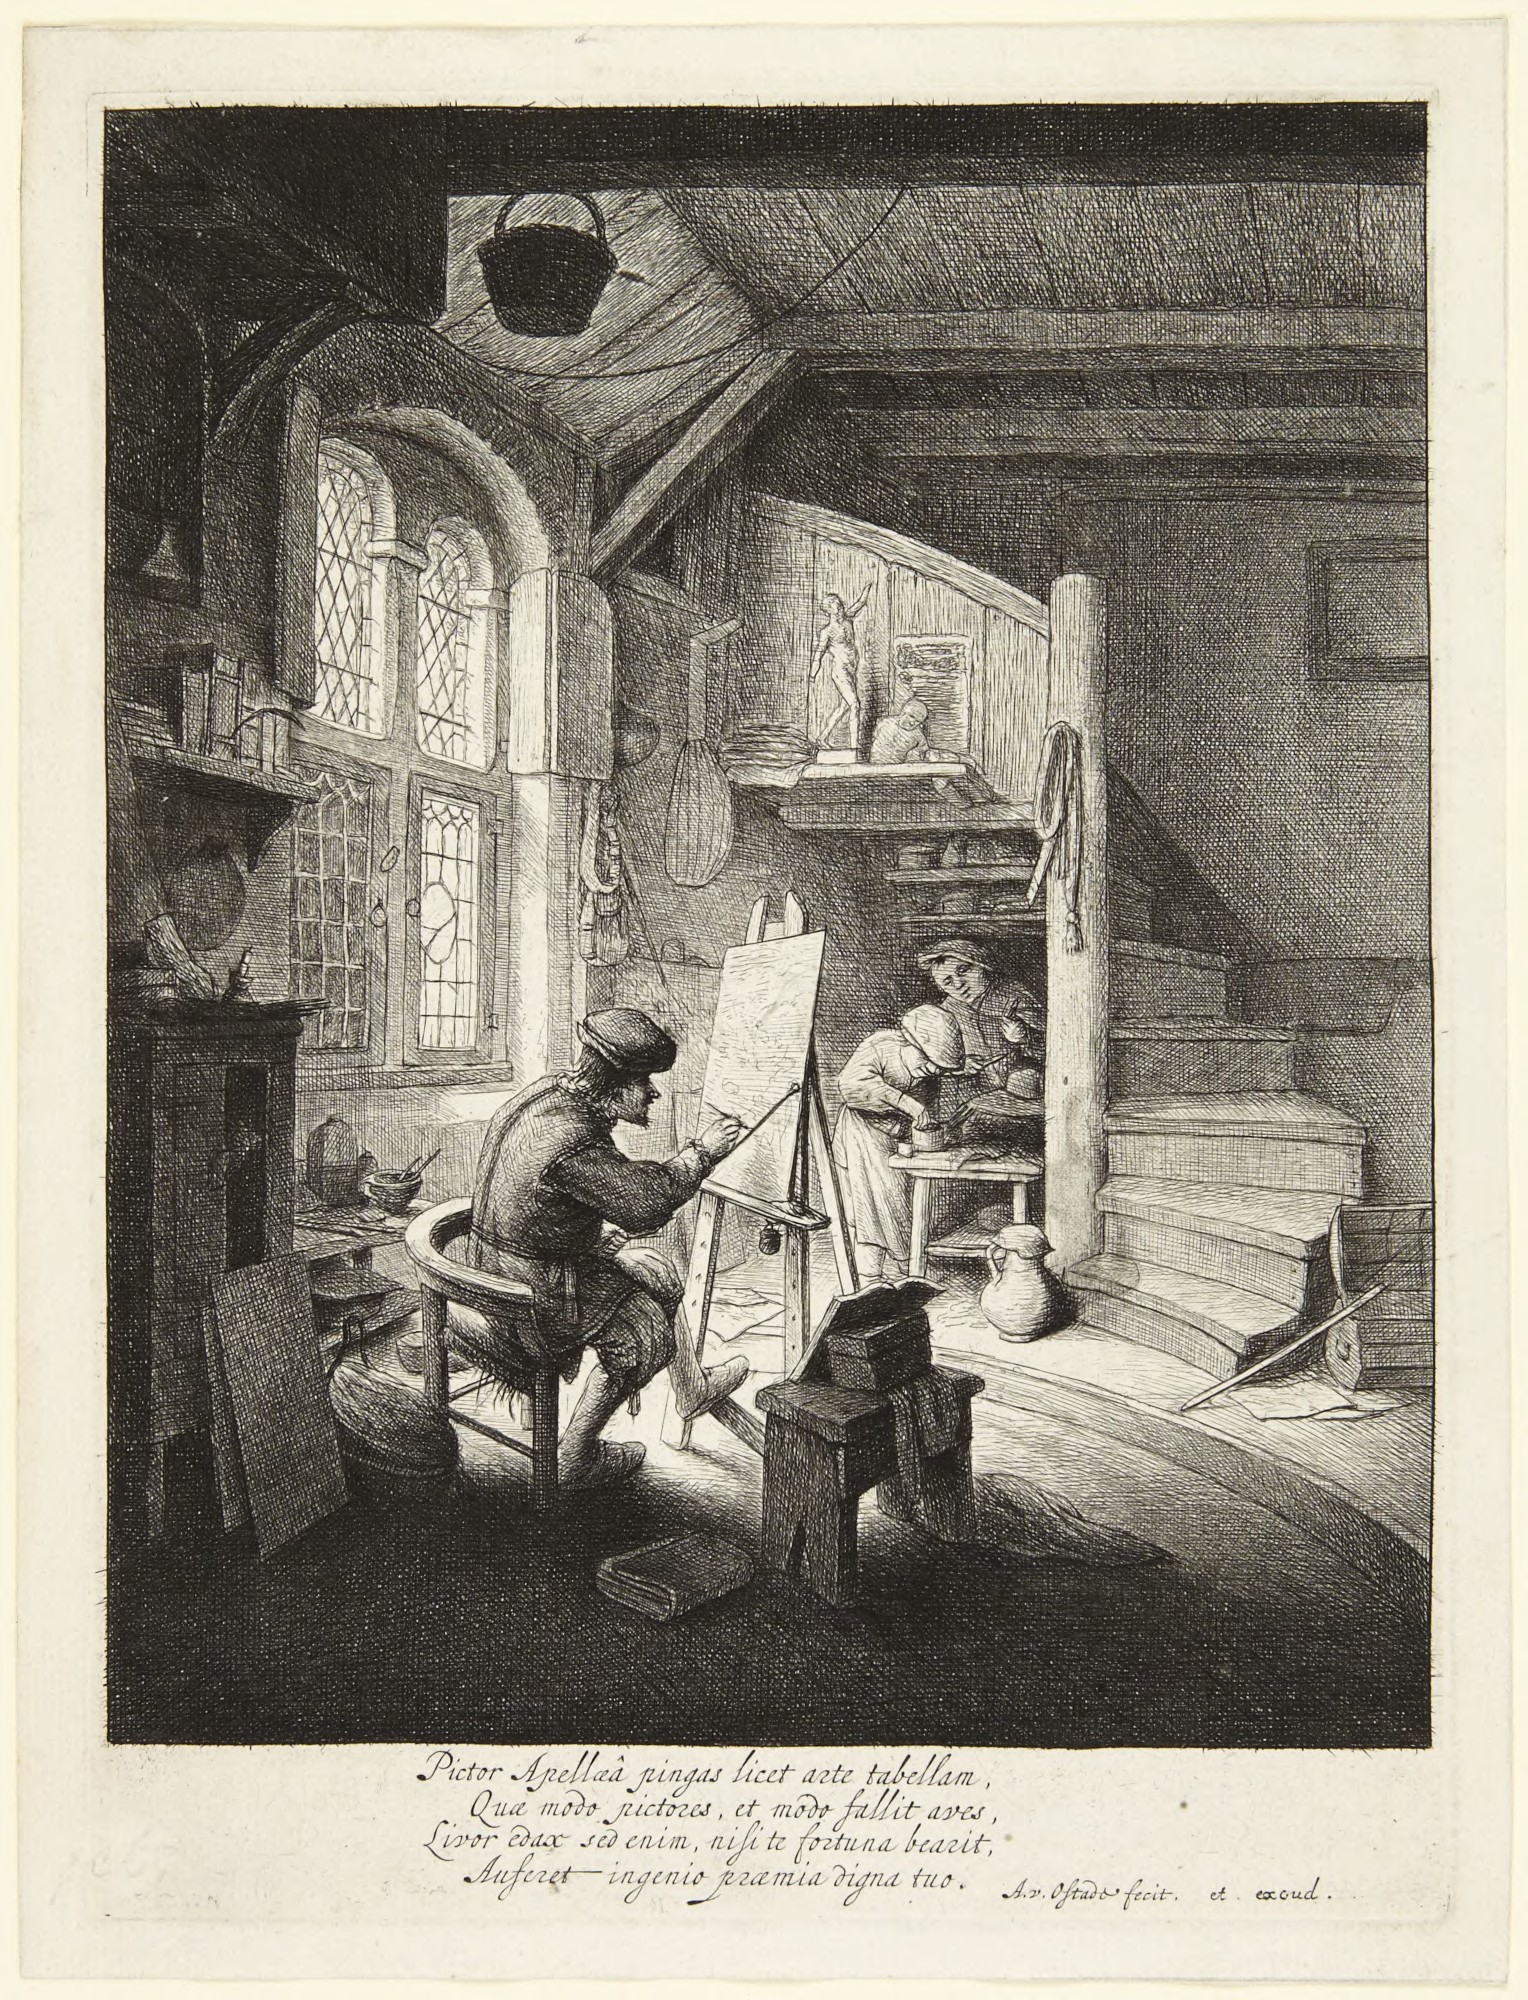 The Painter in his Studio (x1934-502)